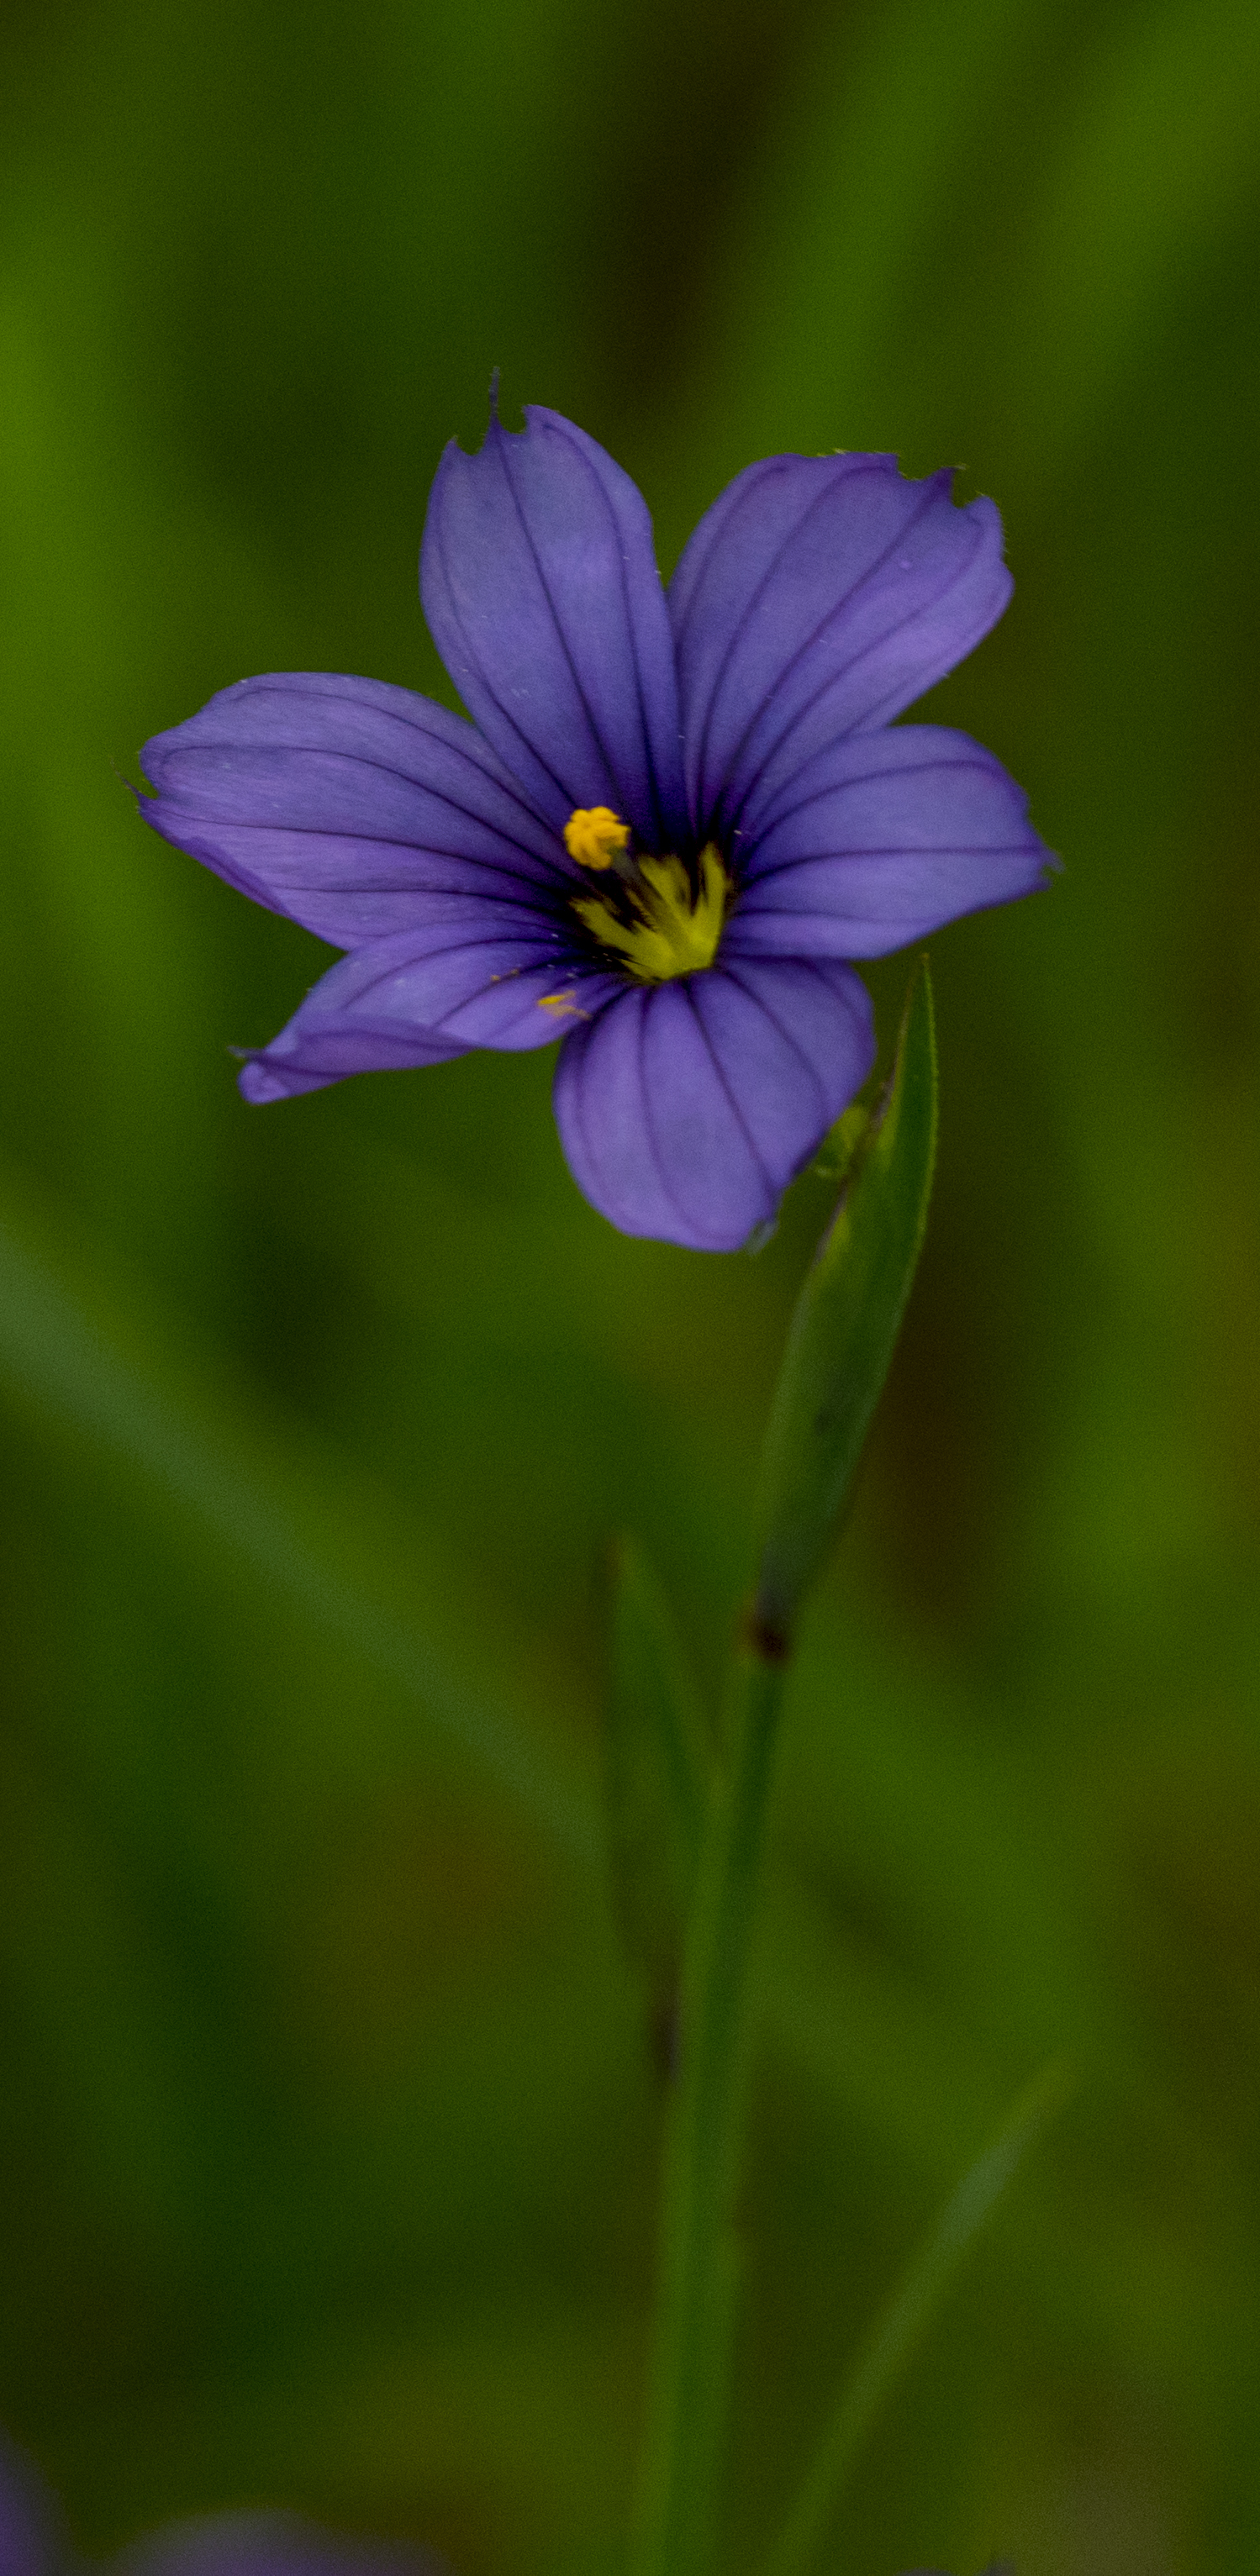 Blue Eyed Grass, Wildflower at Santa Teresa County Park, San Jose, California